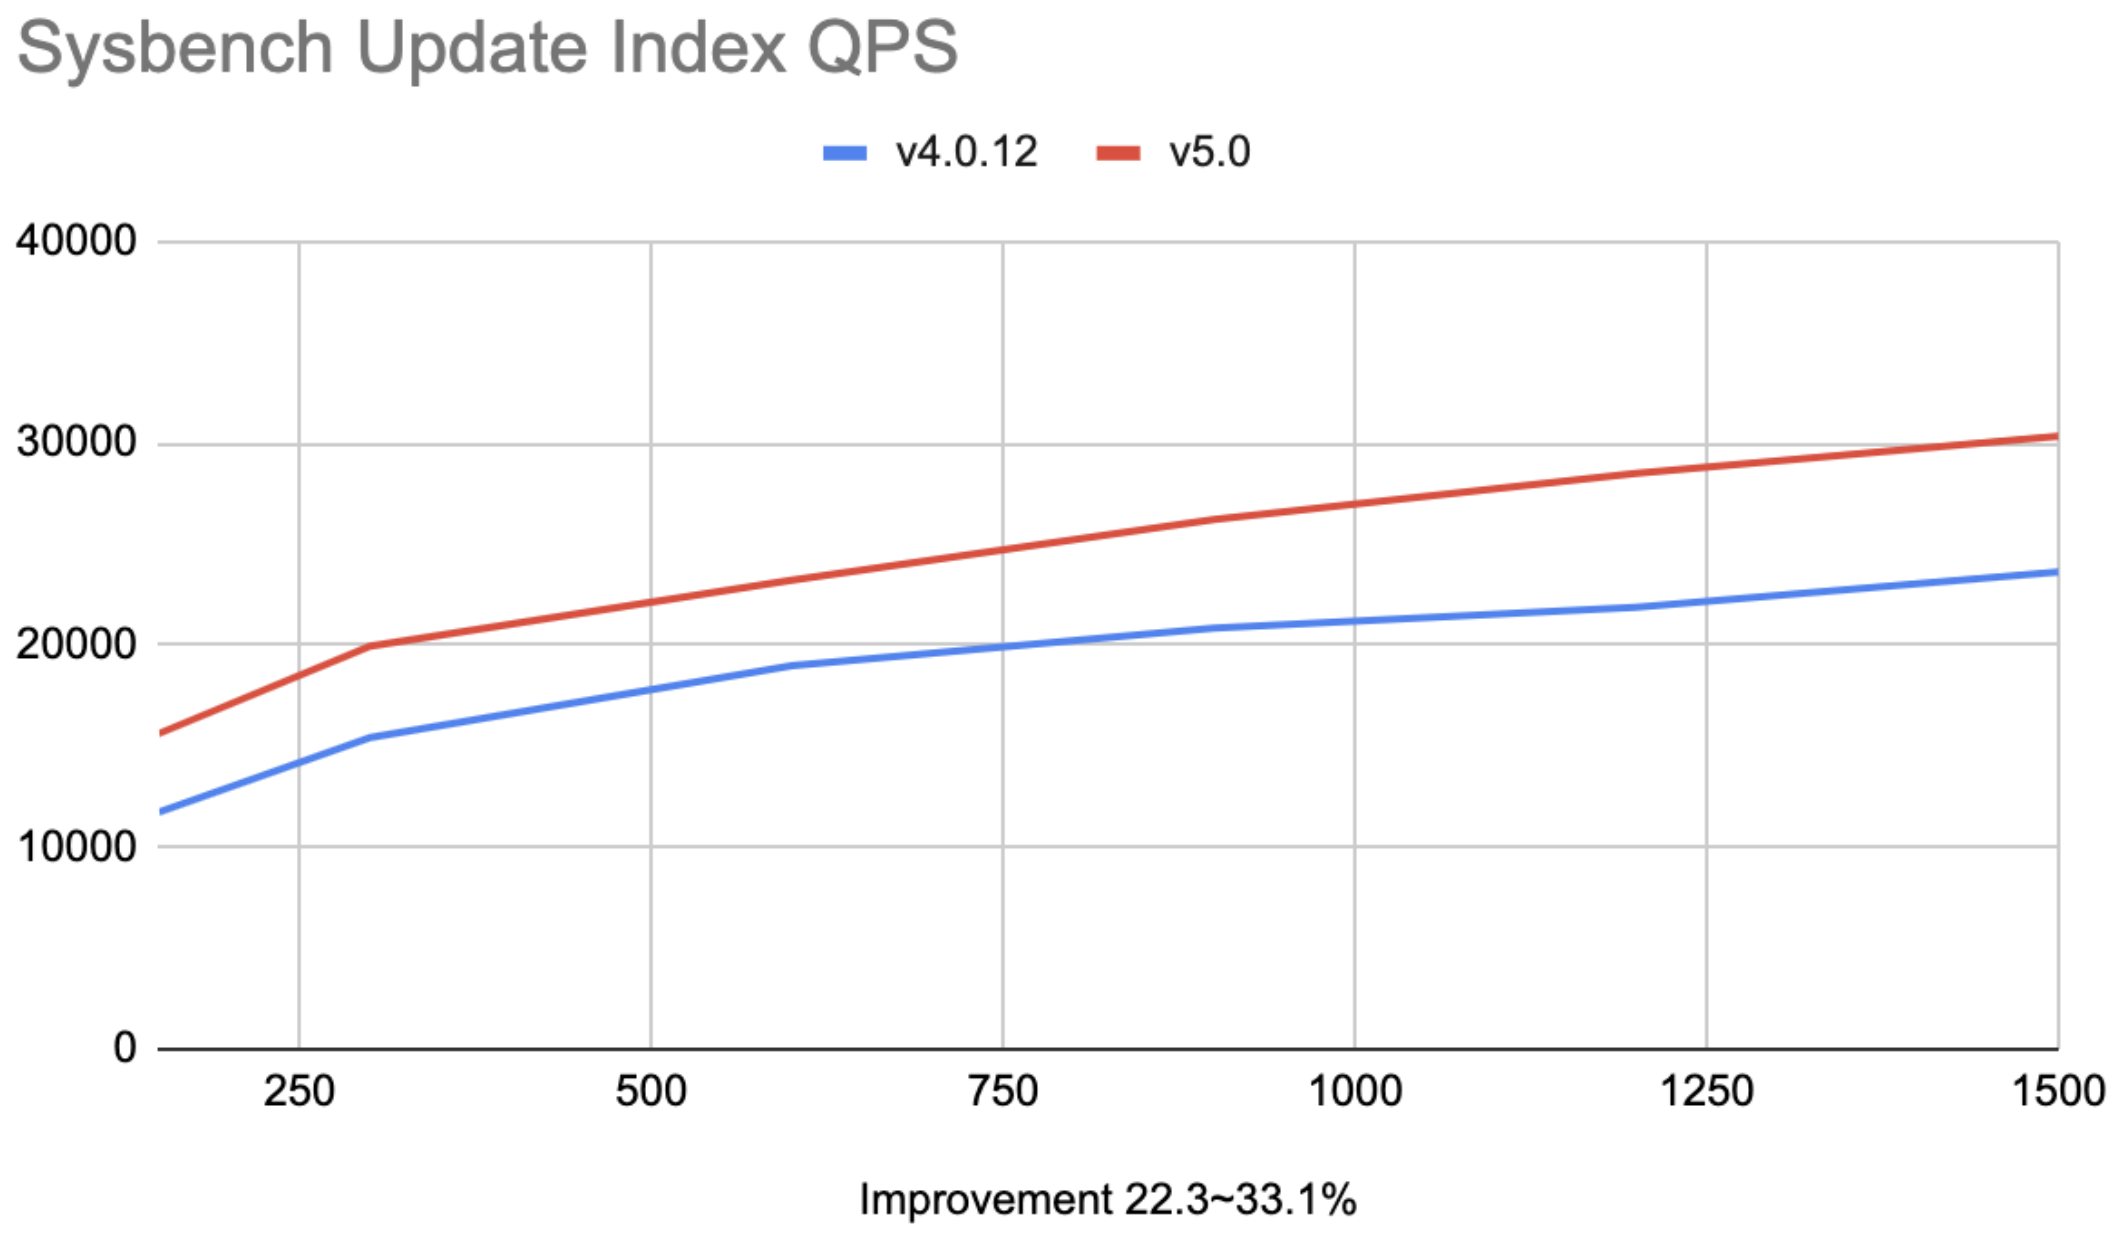 TiDB 4.0 vs. TiDB 5.0 for sysbench update index